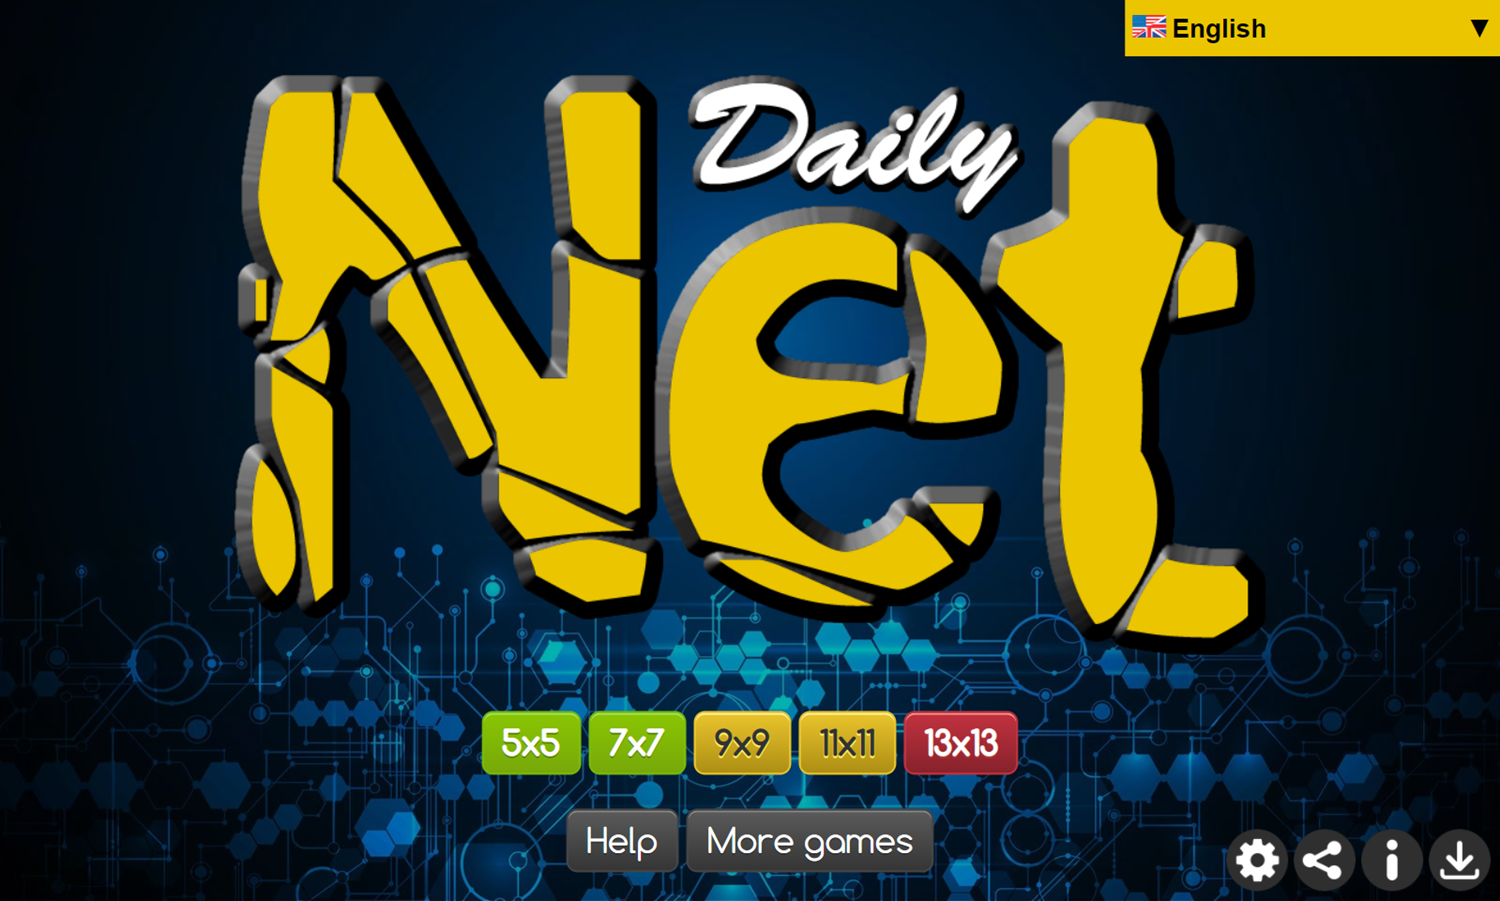 Daily Net Game Welcome Screen Screenshot.